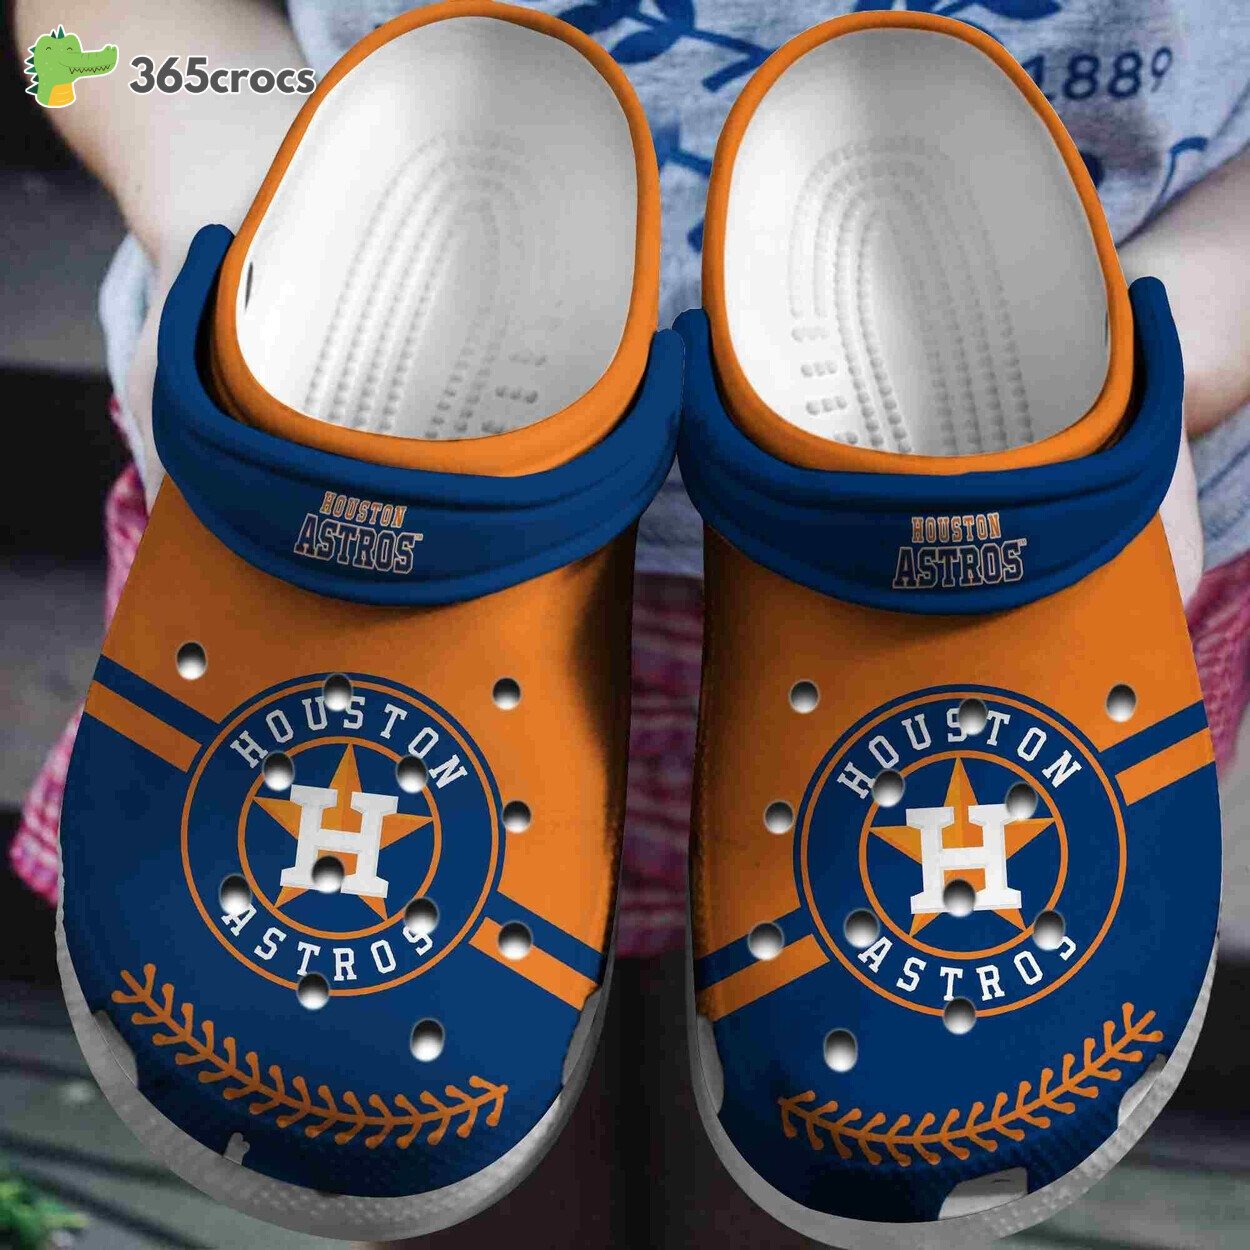 Houston Astros Baseball Comfortable Crocss Clogs Unique Footwear